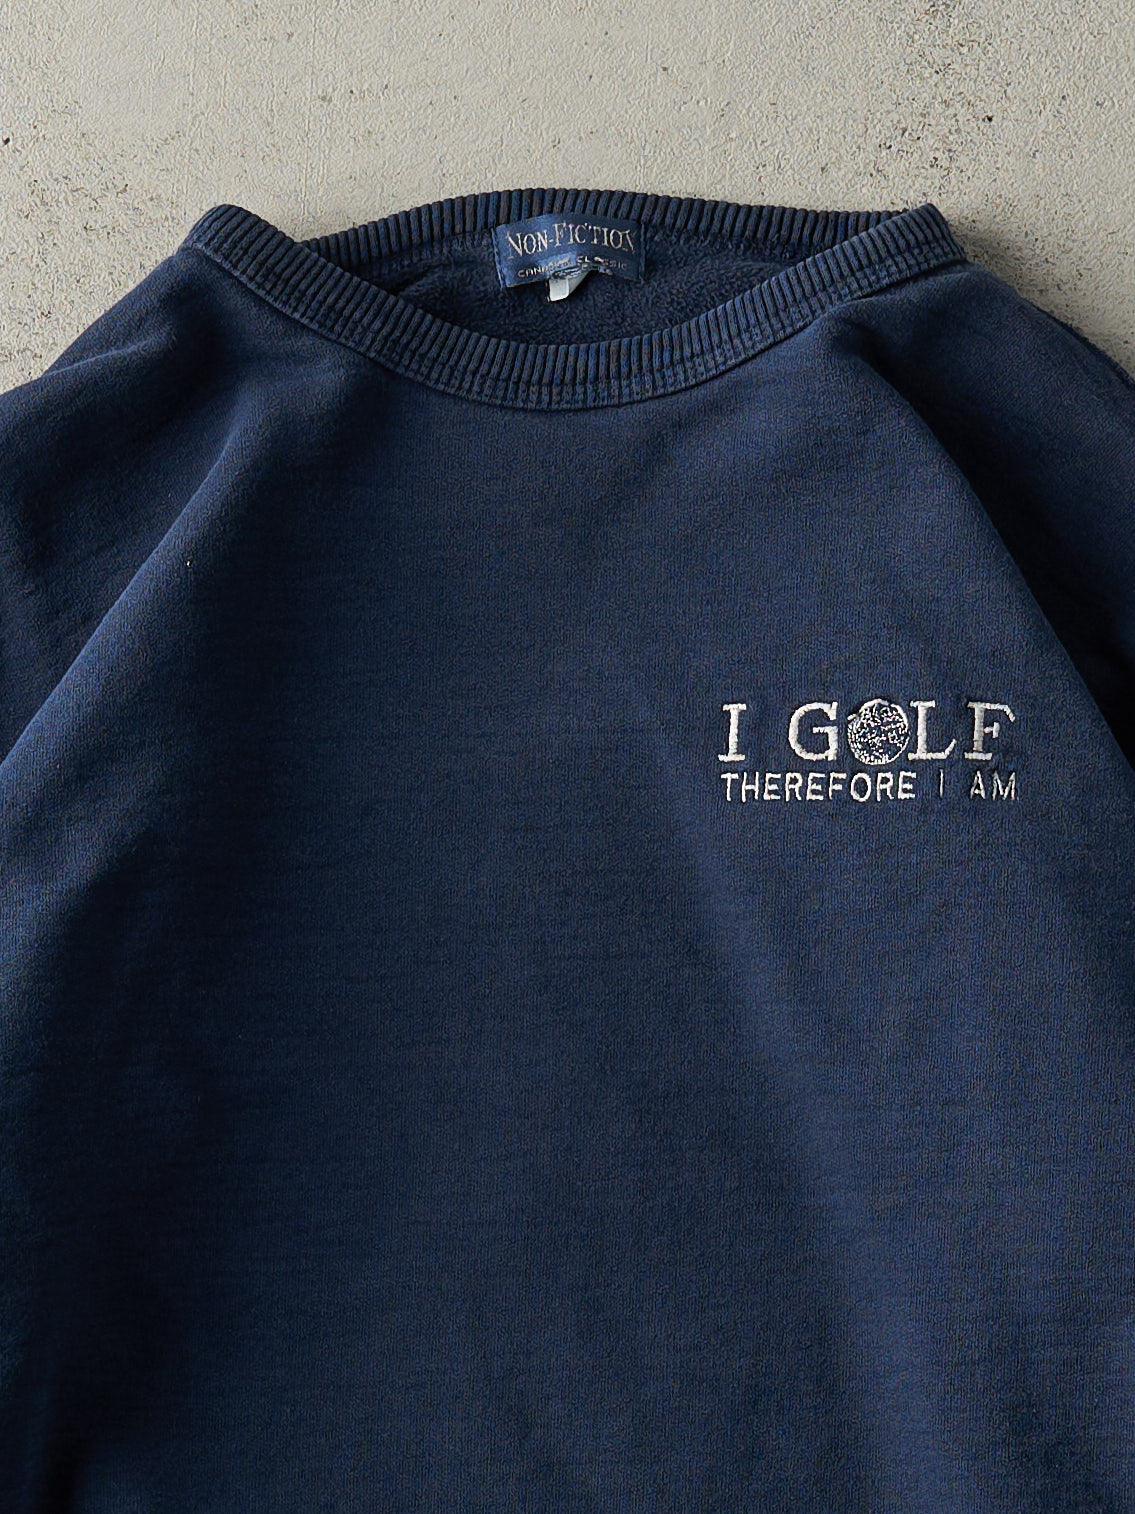 Vintage 90s Navy Blue Embroidered Golf Slogan Boxy Crewneck (L)